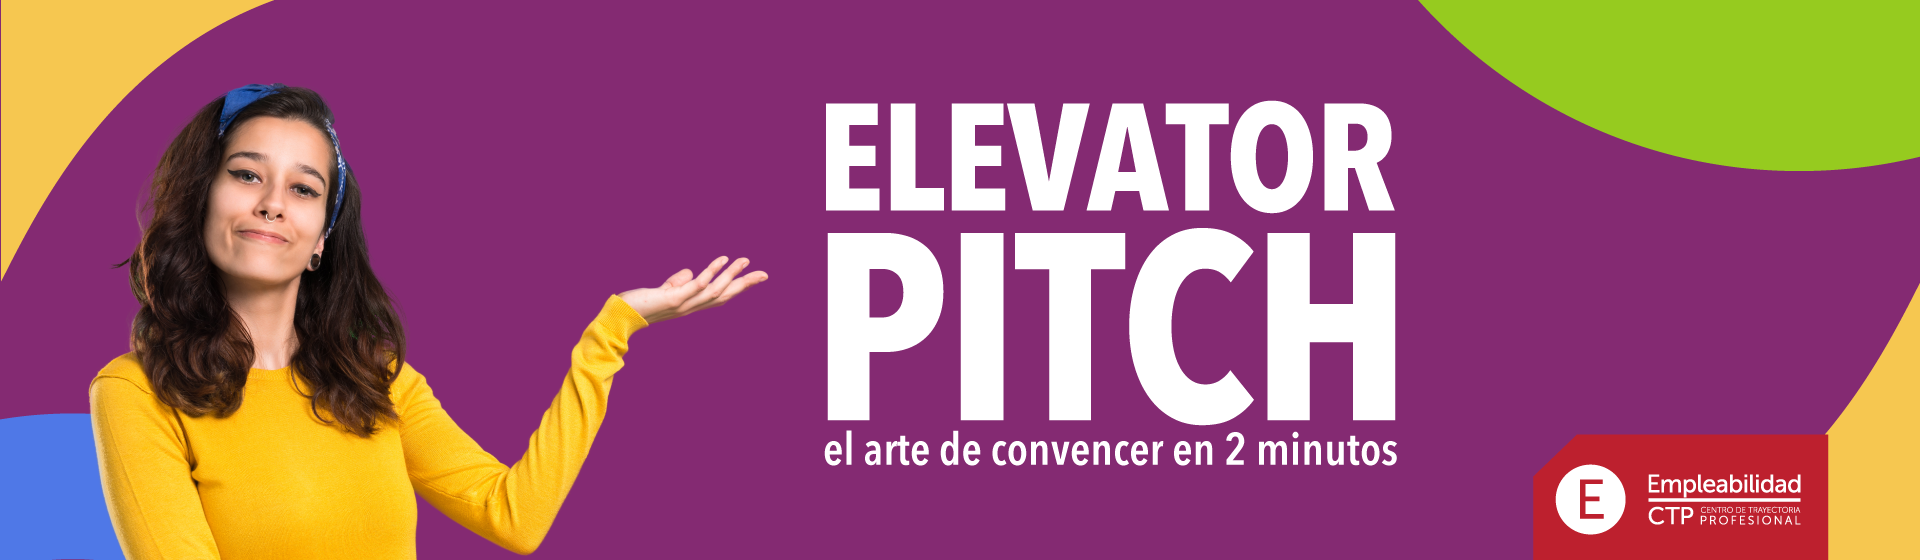 elevator pitch | Uniandes